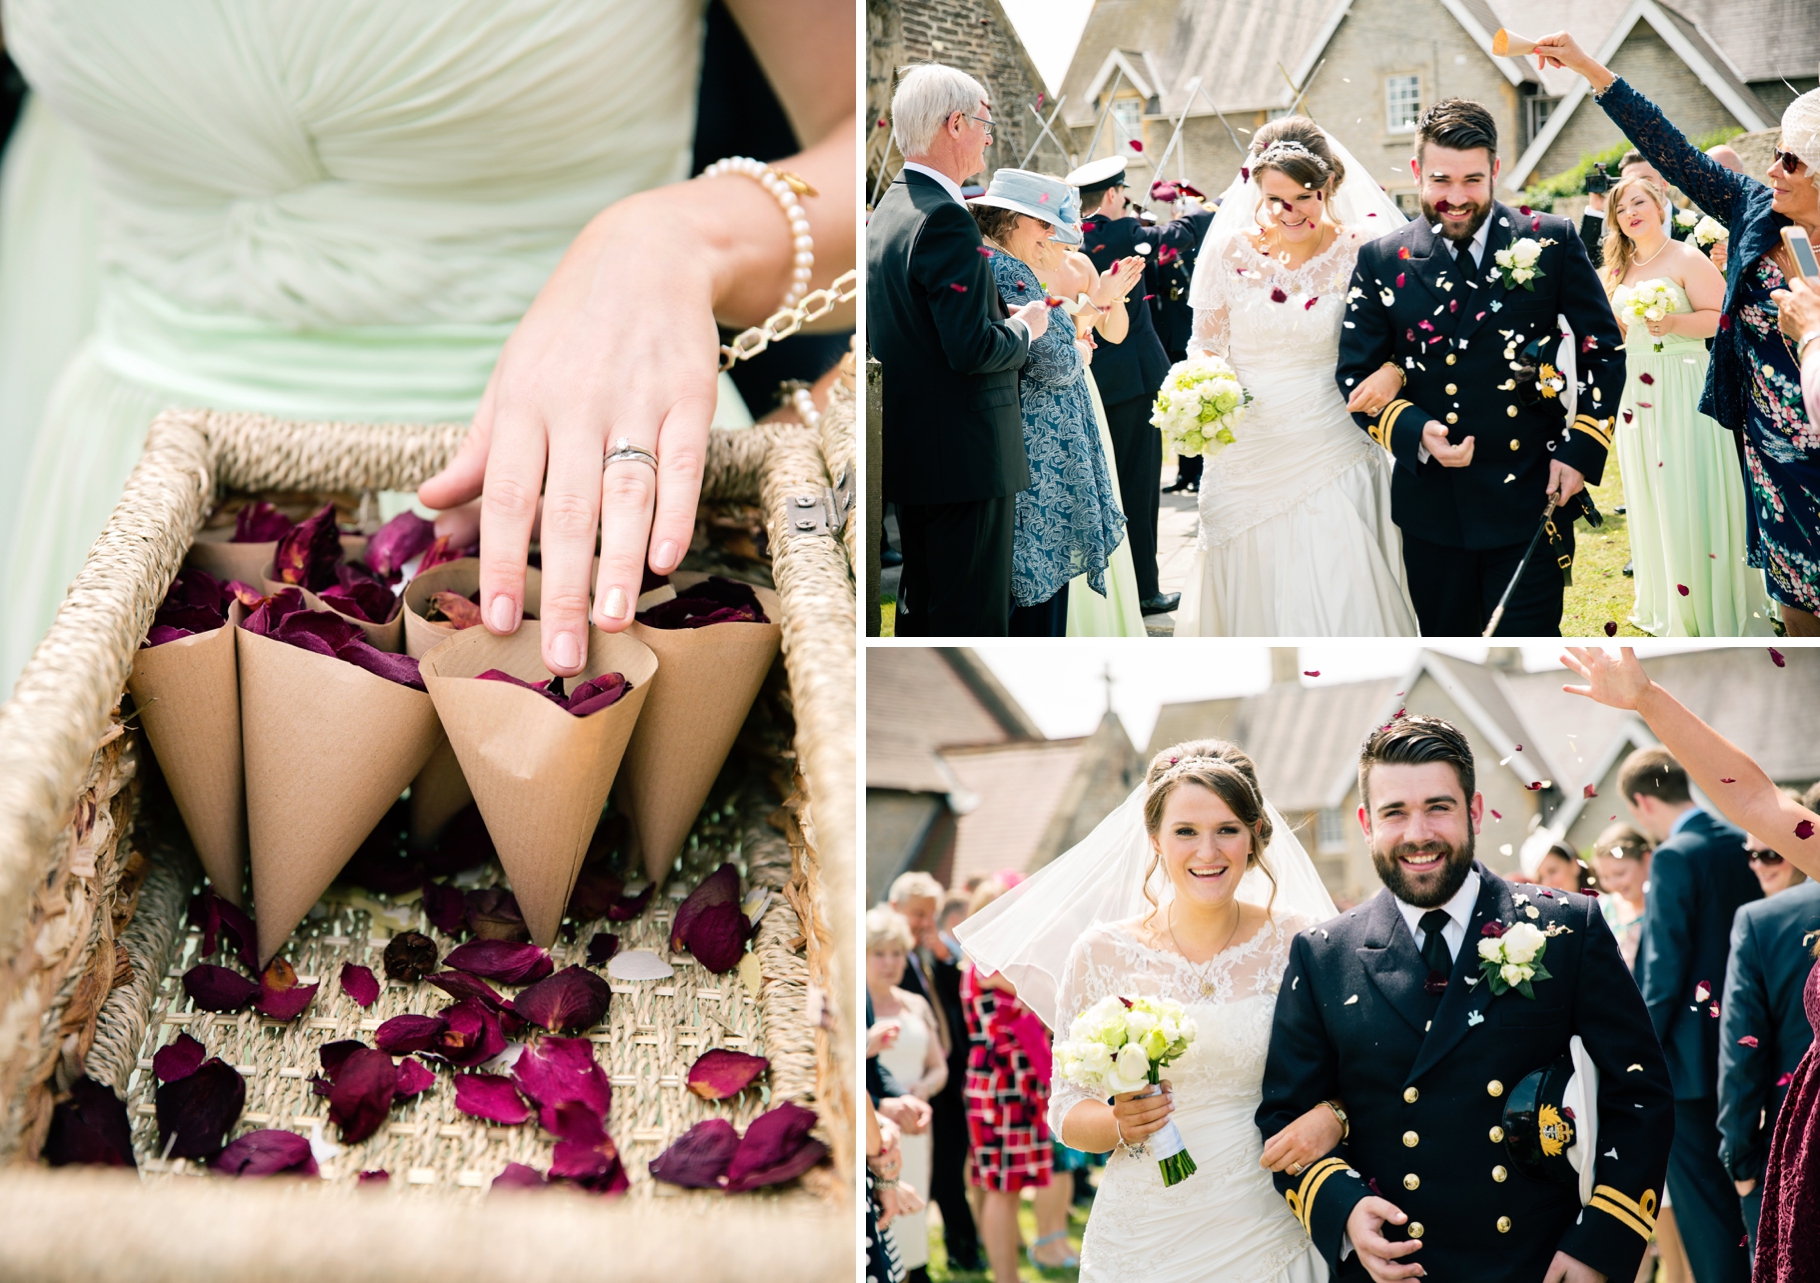 20-Confetti-Church-Ceremony-Bride-Groom-International-Photographer-England-Bristol-Wedding-Photography-by-Betty-Elaine